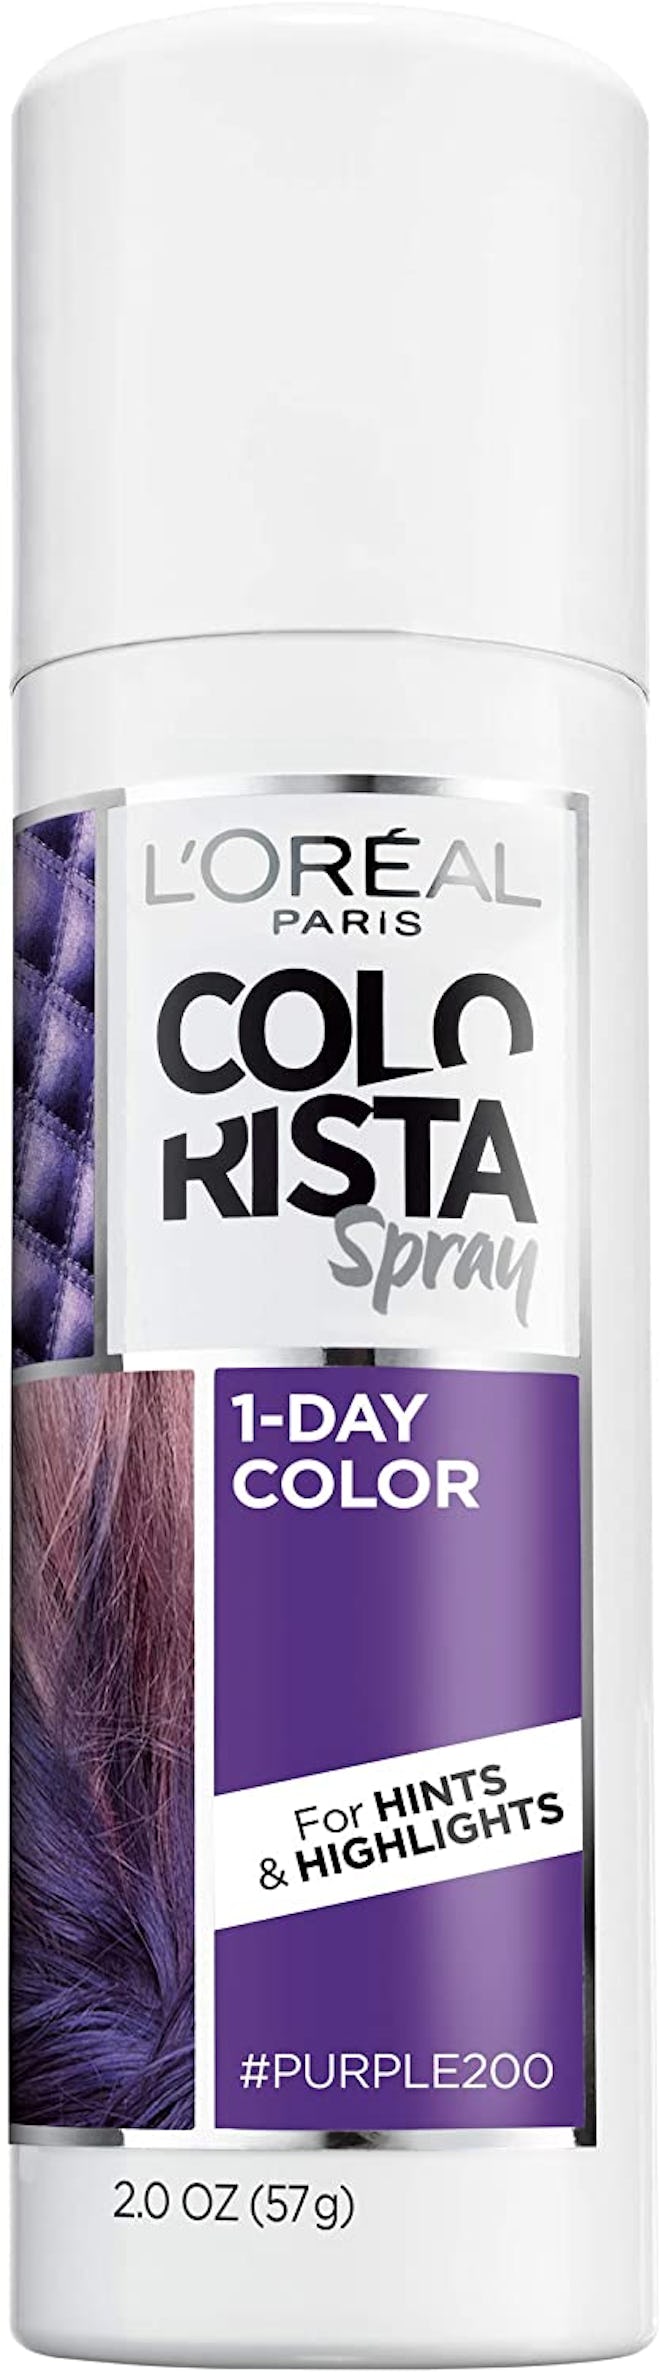 L'Oreal Paris Colorista 1-Day Temporary Hair Color Spray